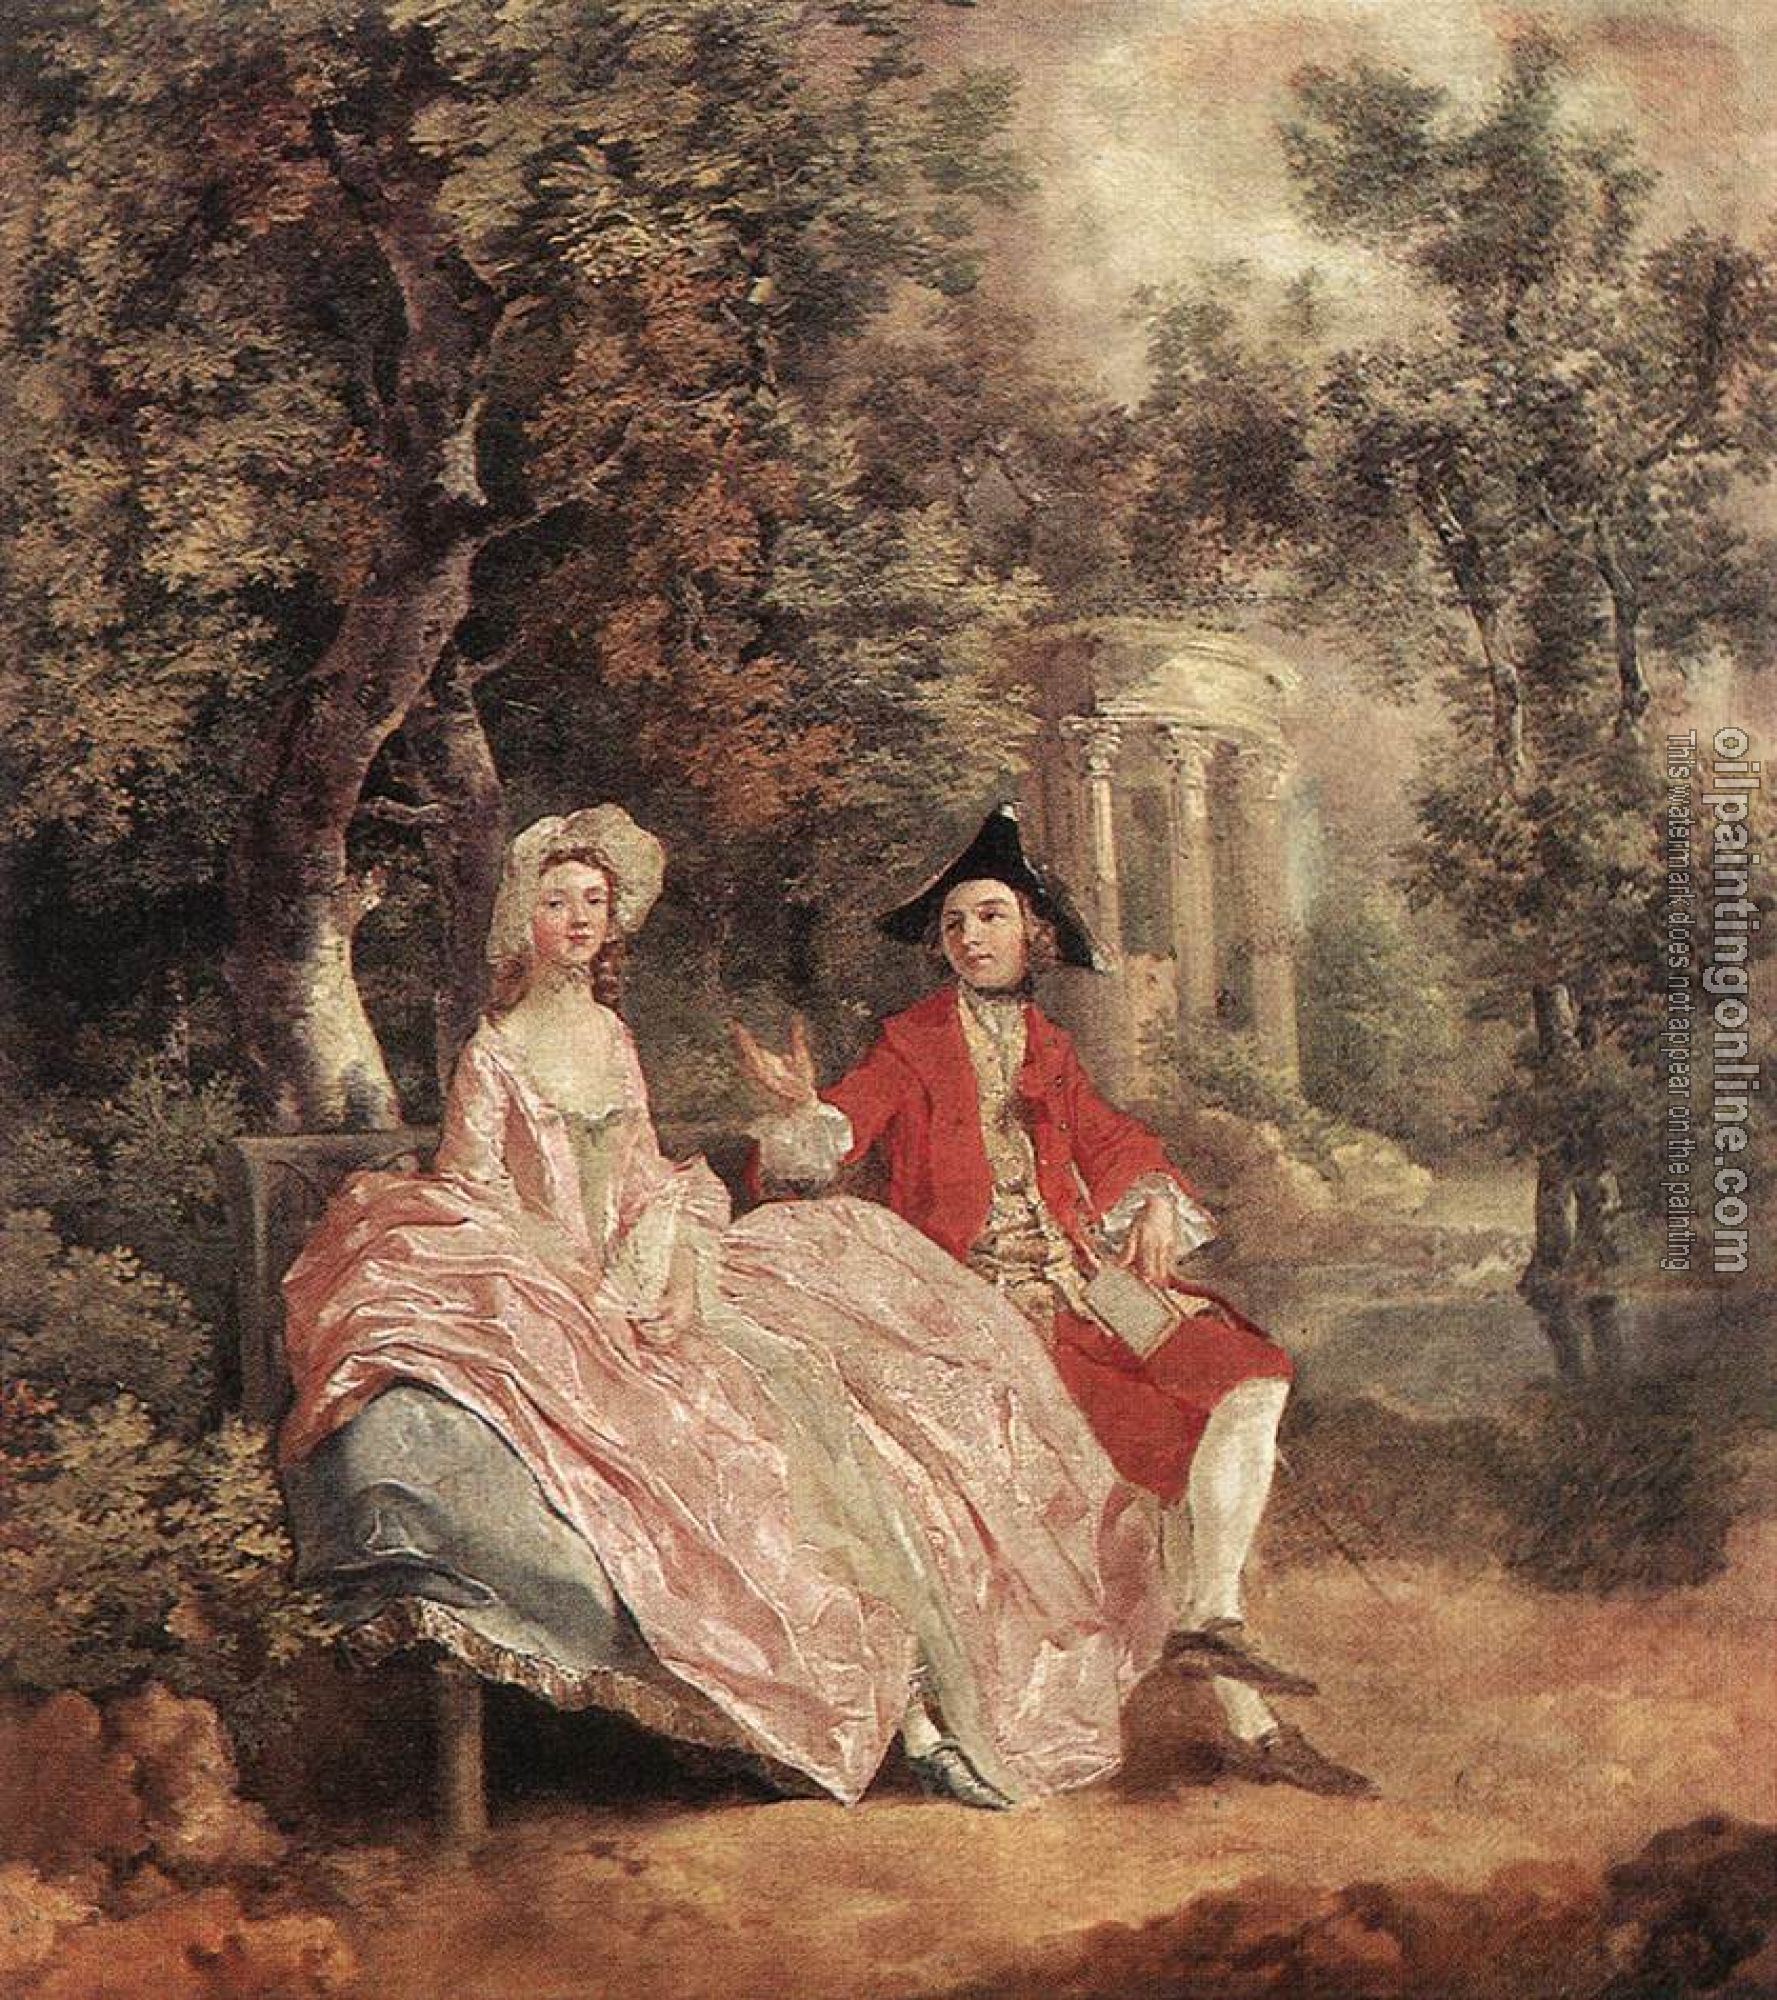 Gainsborough, Thomas - Conversation in a Park